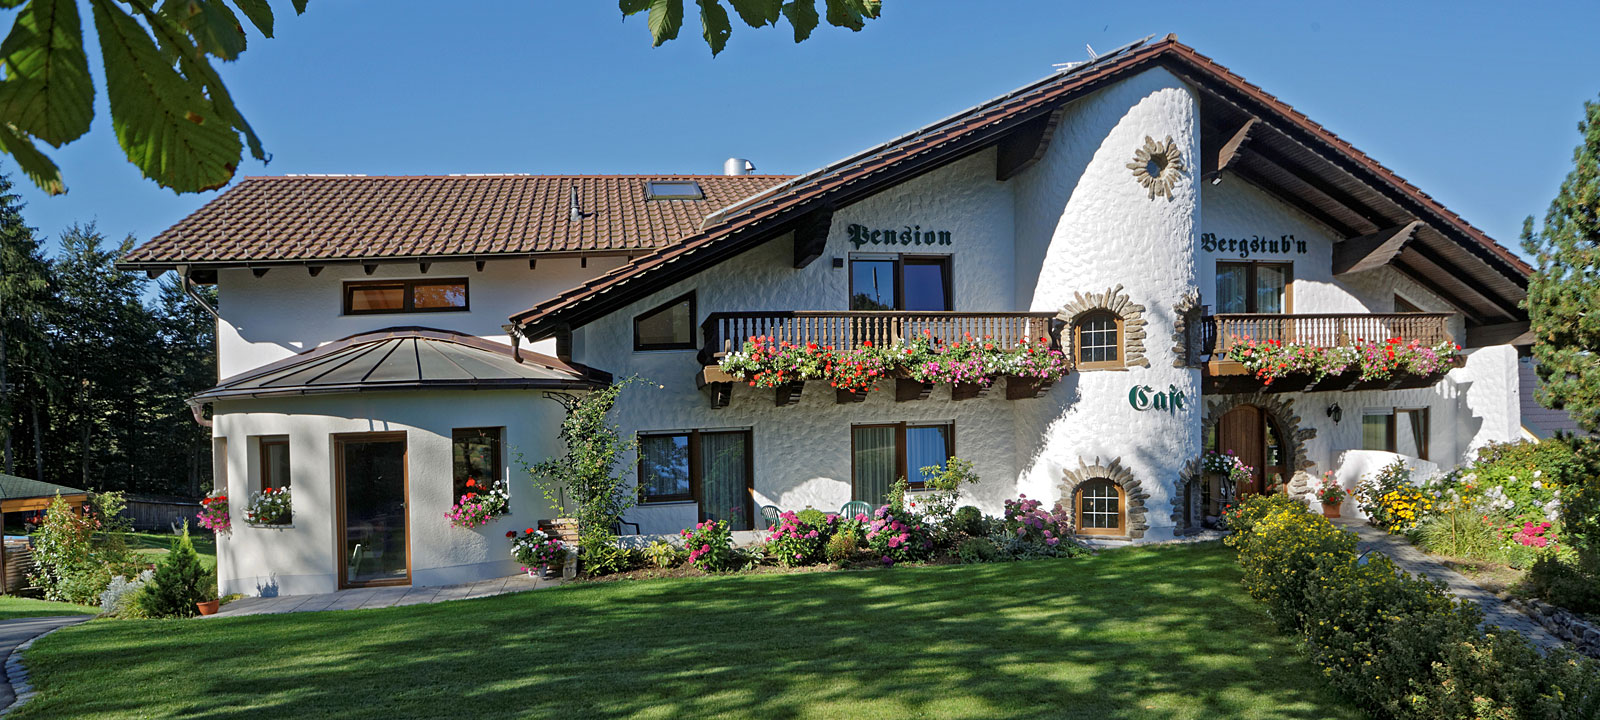 Pension Bergstubn in Saldenburg im Dreiburgenland